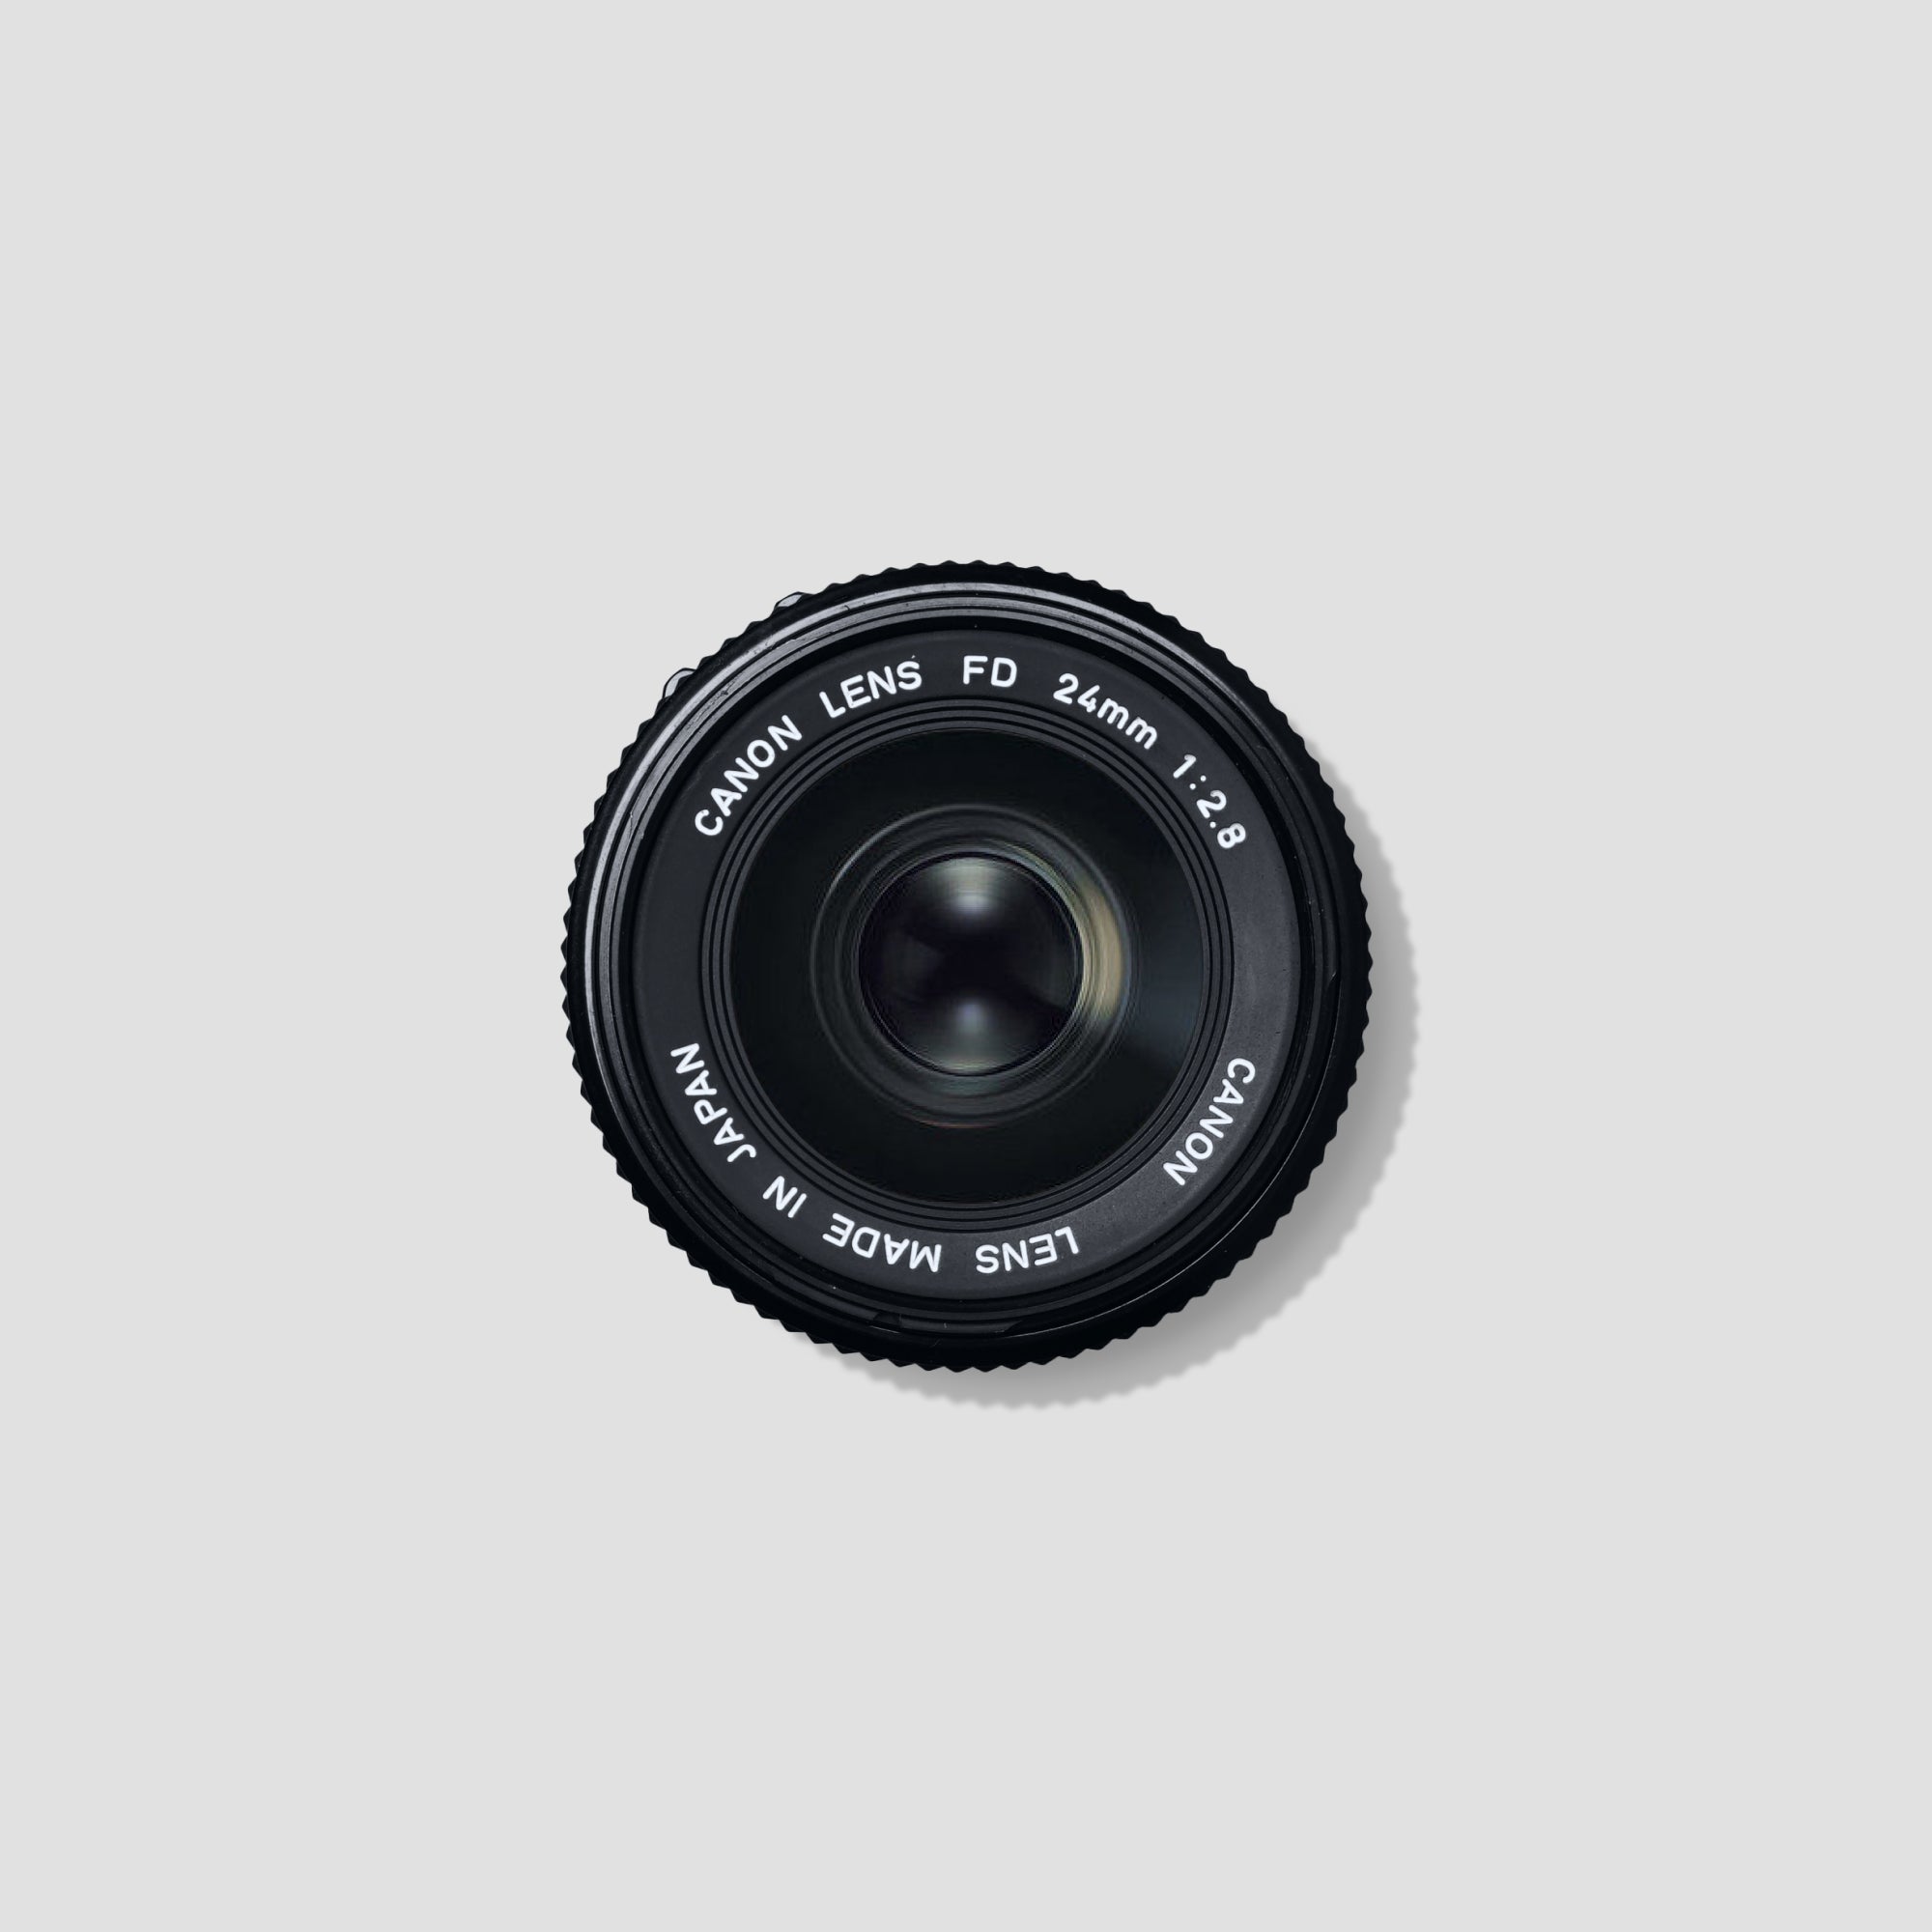 Canon FD 24mm 2.8 - wide angle